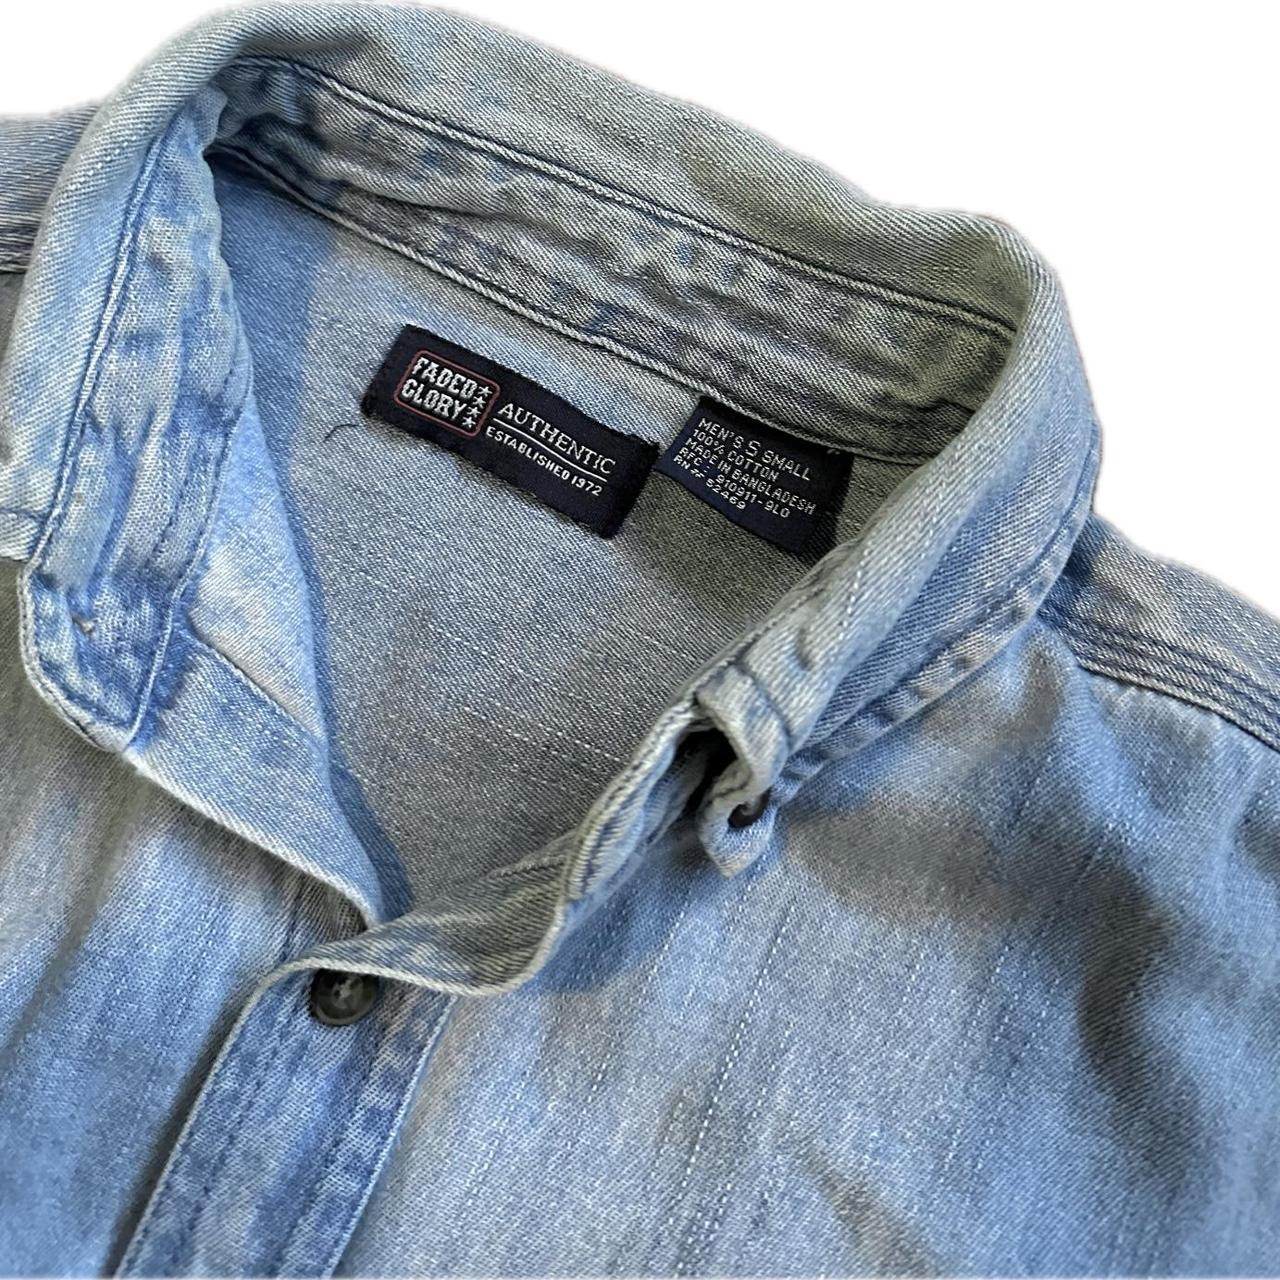 mens size lg faded glory jean shirt | eBay